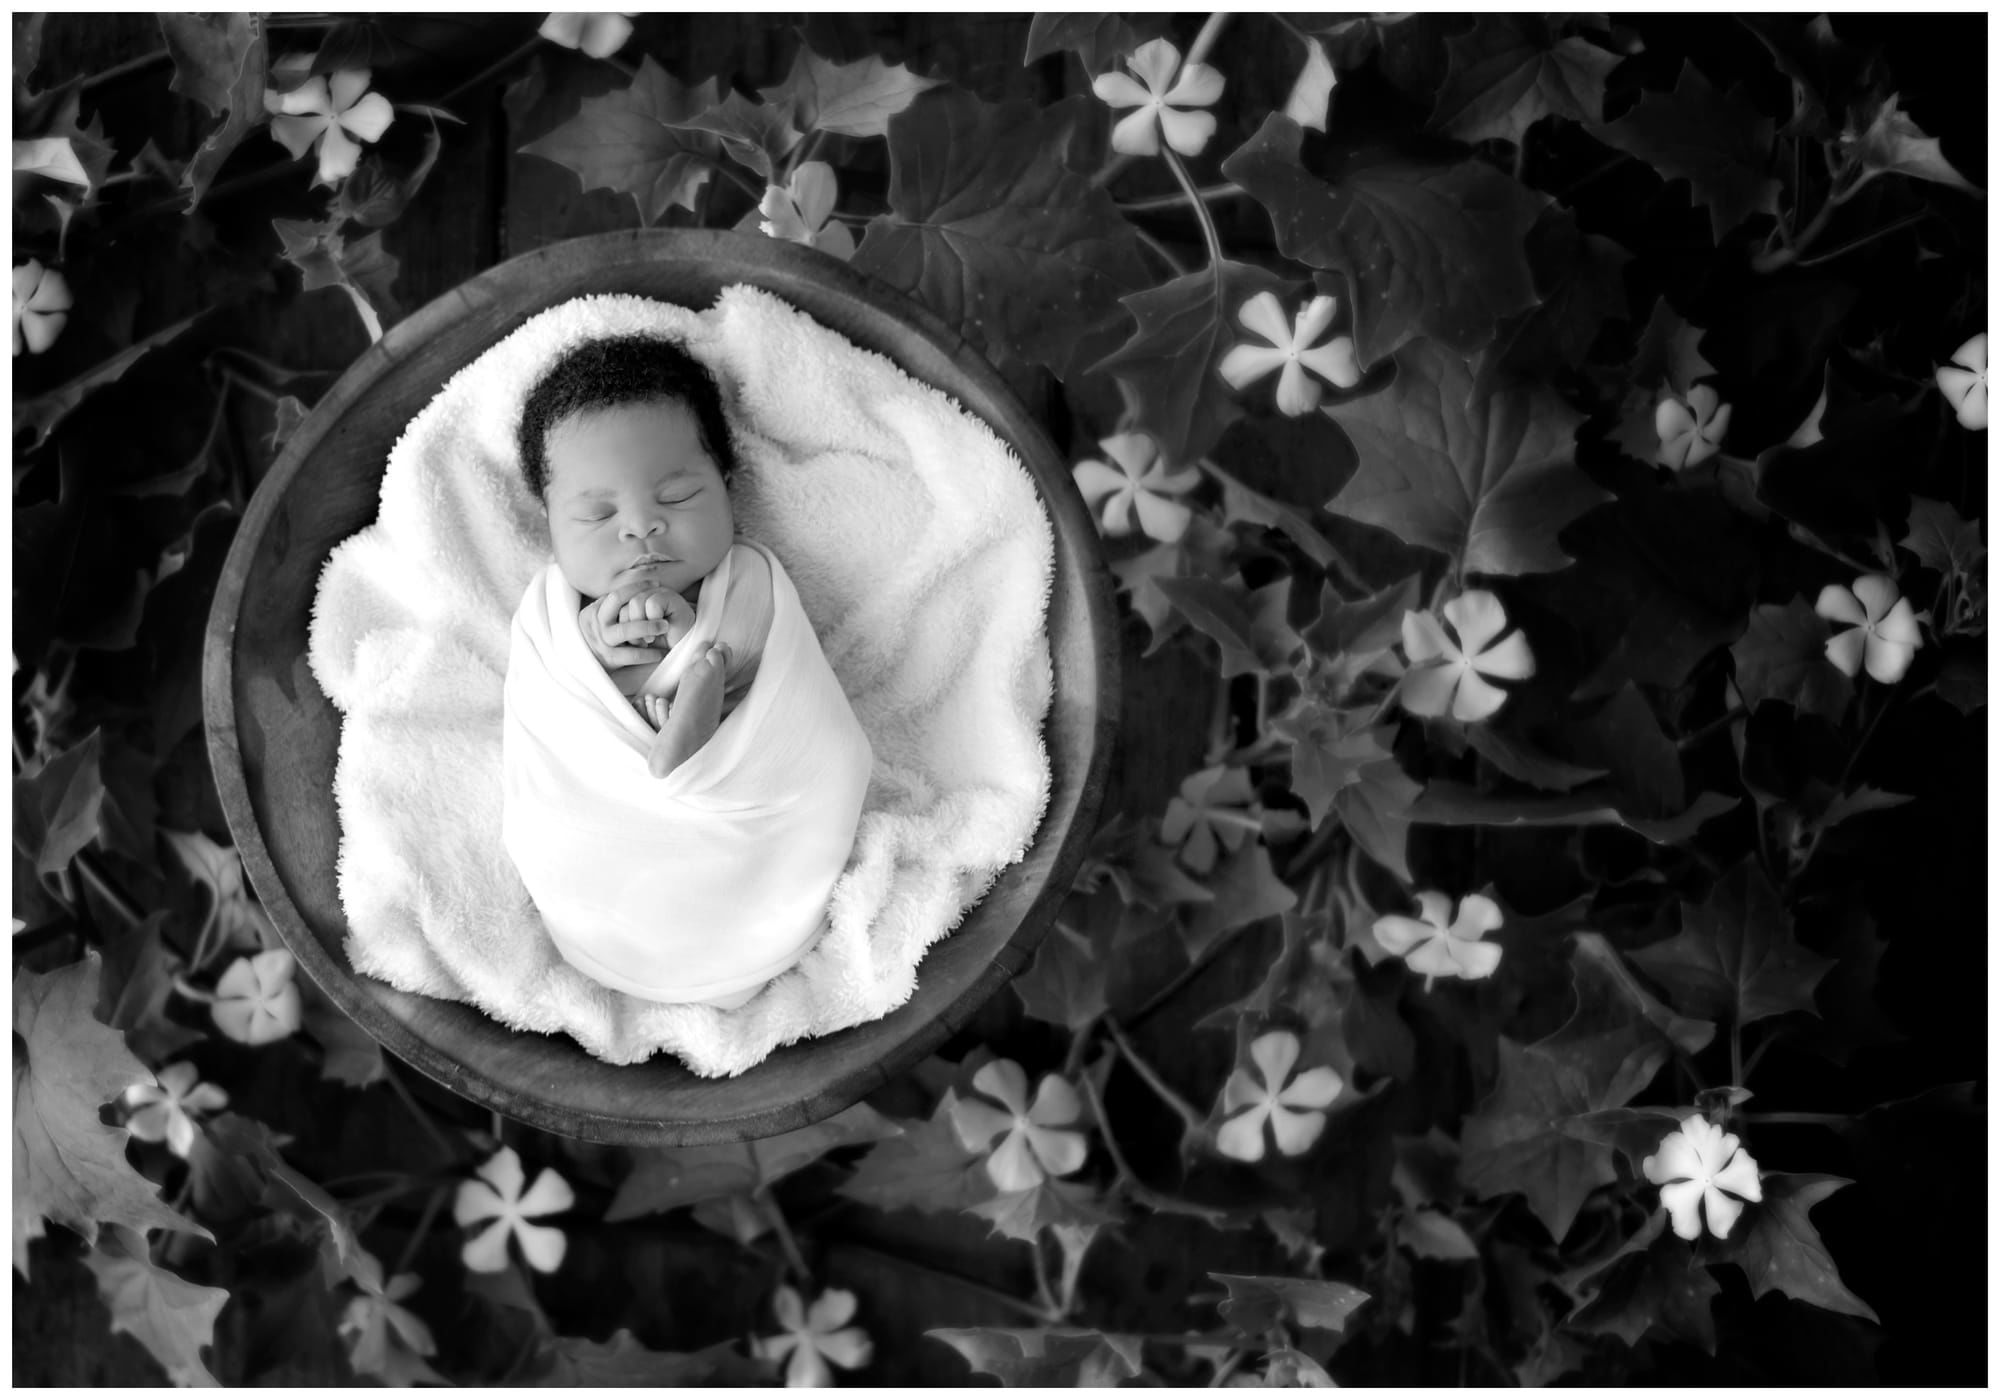 Moon Bailey Newborn Photography